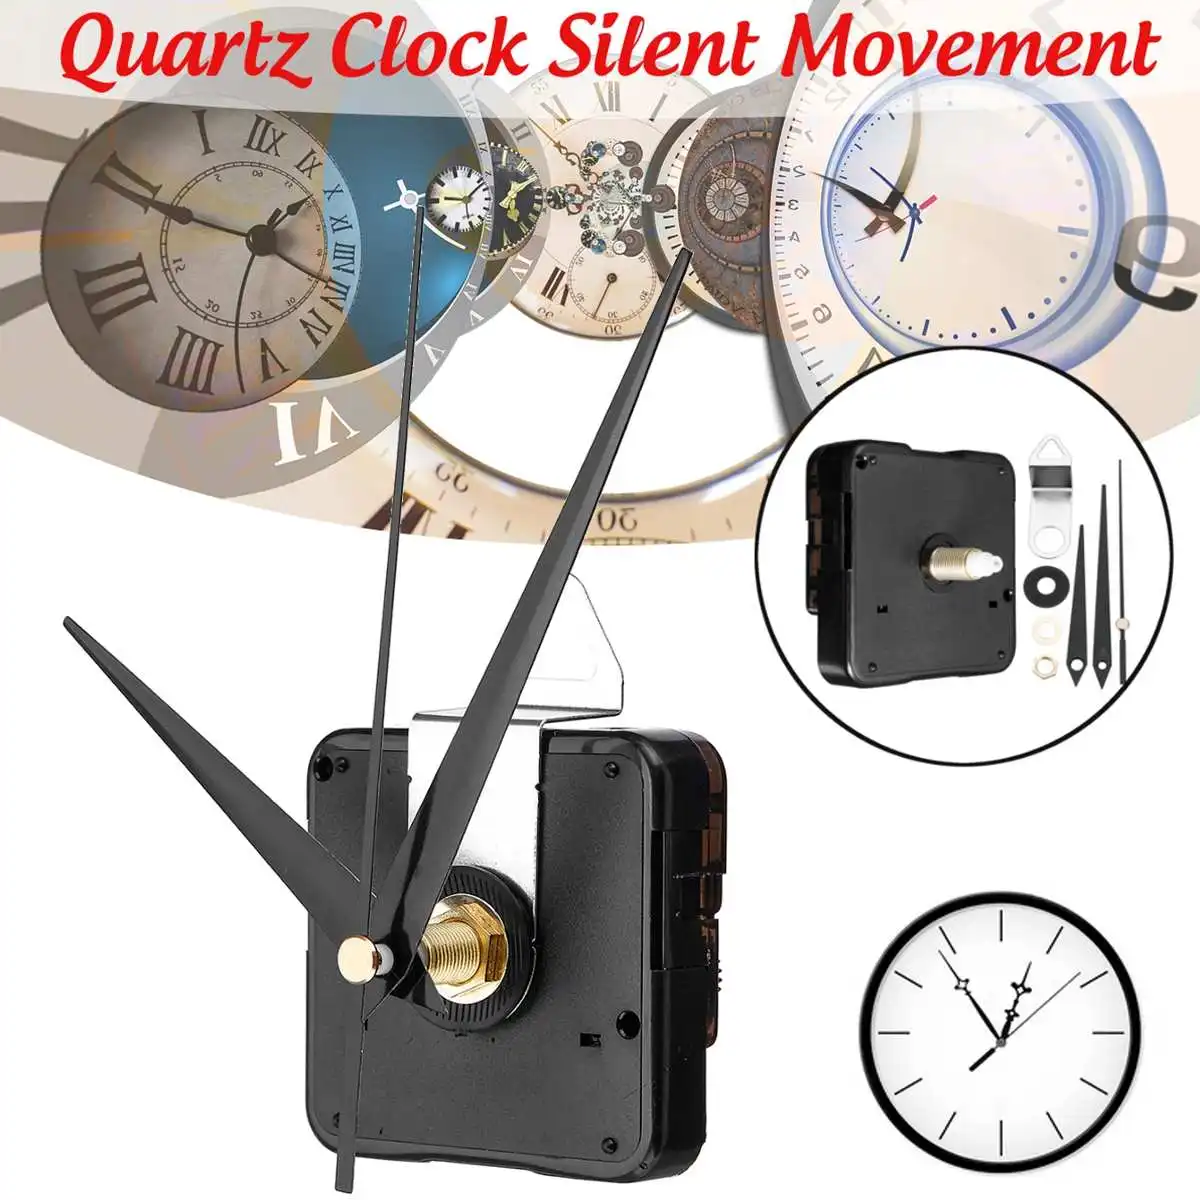 21mm Quartz Silent Clock Movement Kit Hour Minute Second Without Battery  Replacement|Clock Parts & Accessories| - AliExpress